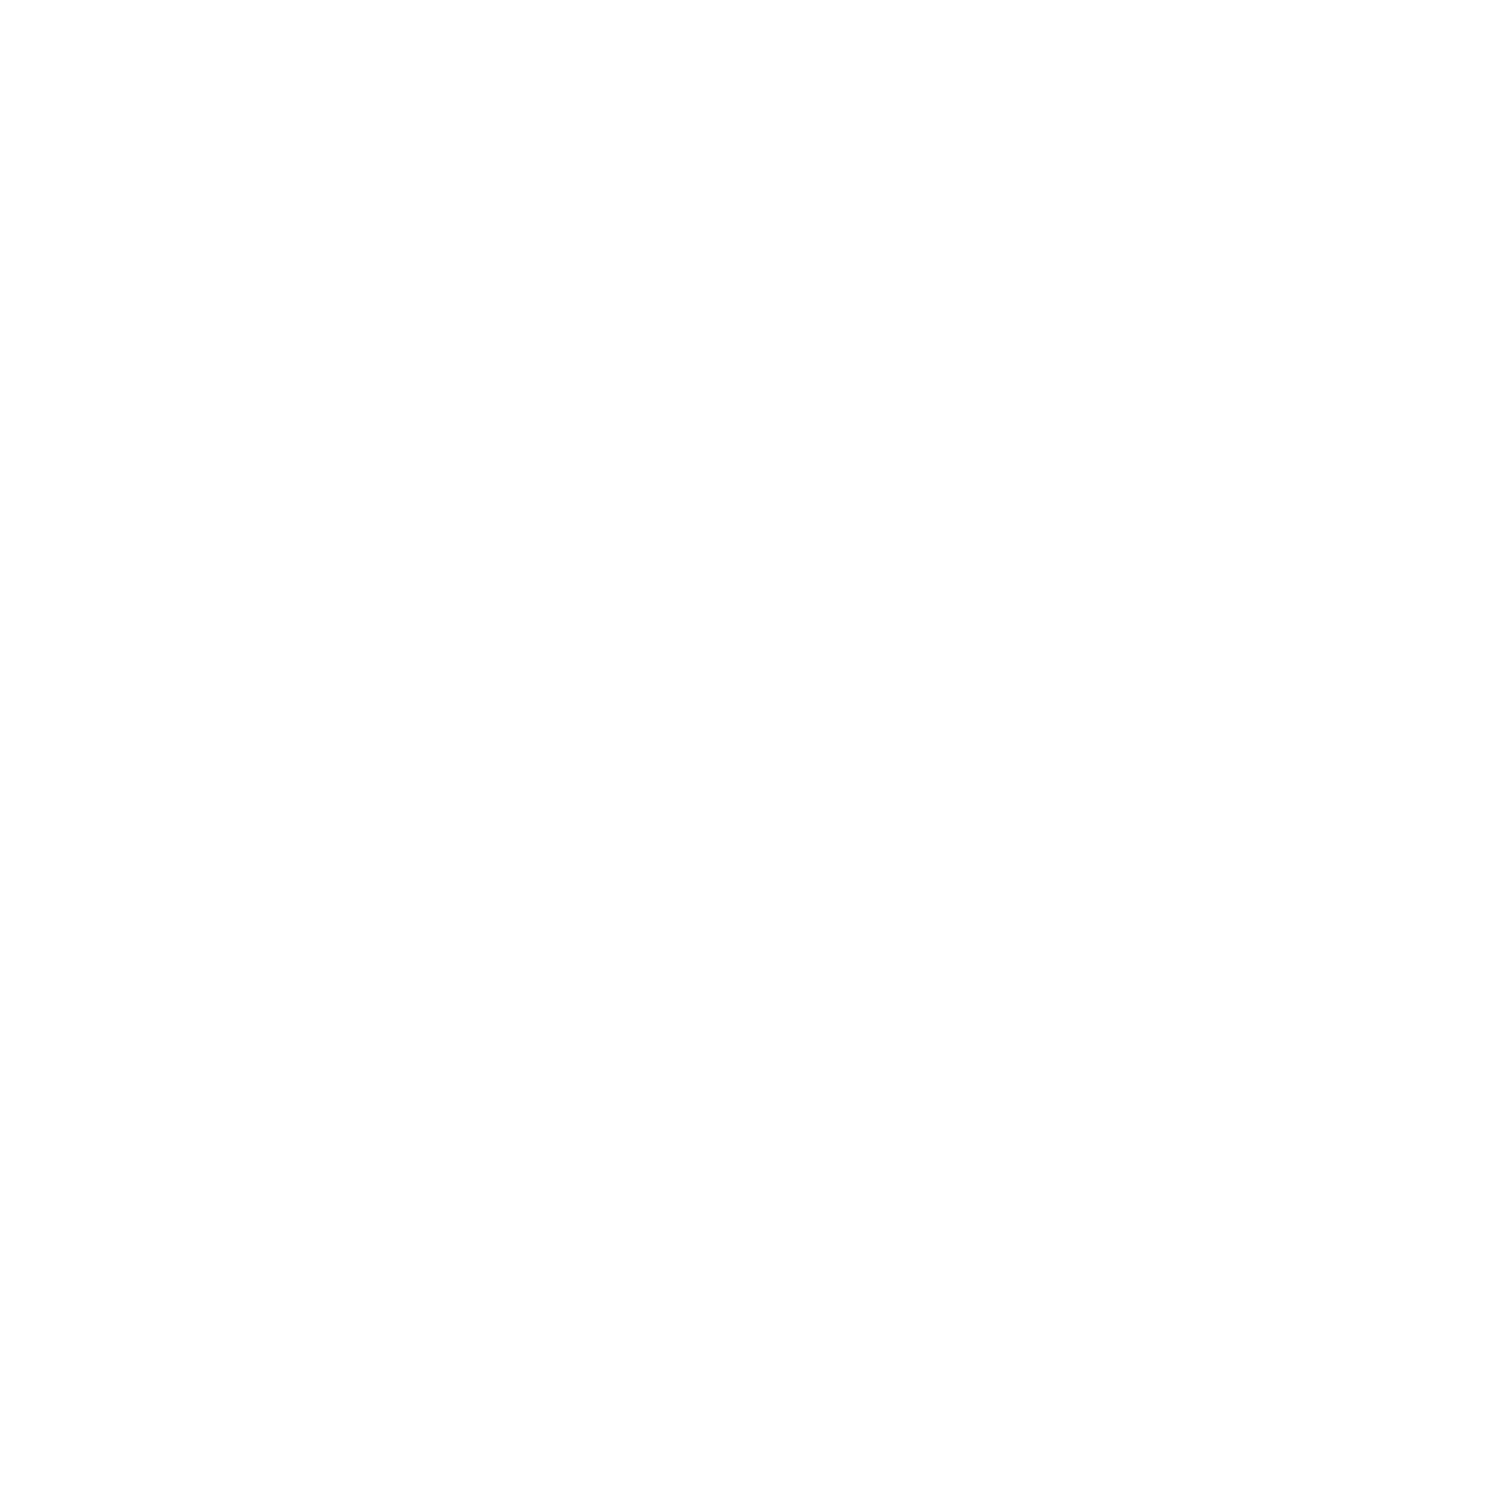 Patty Guy